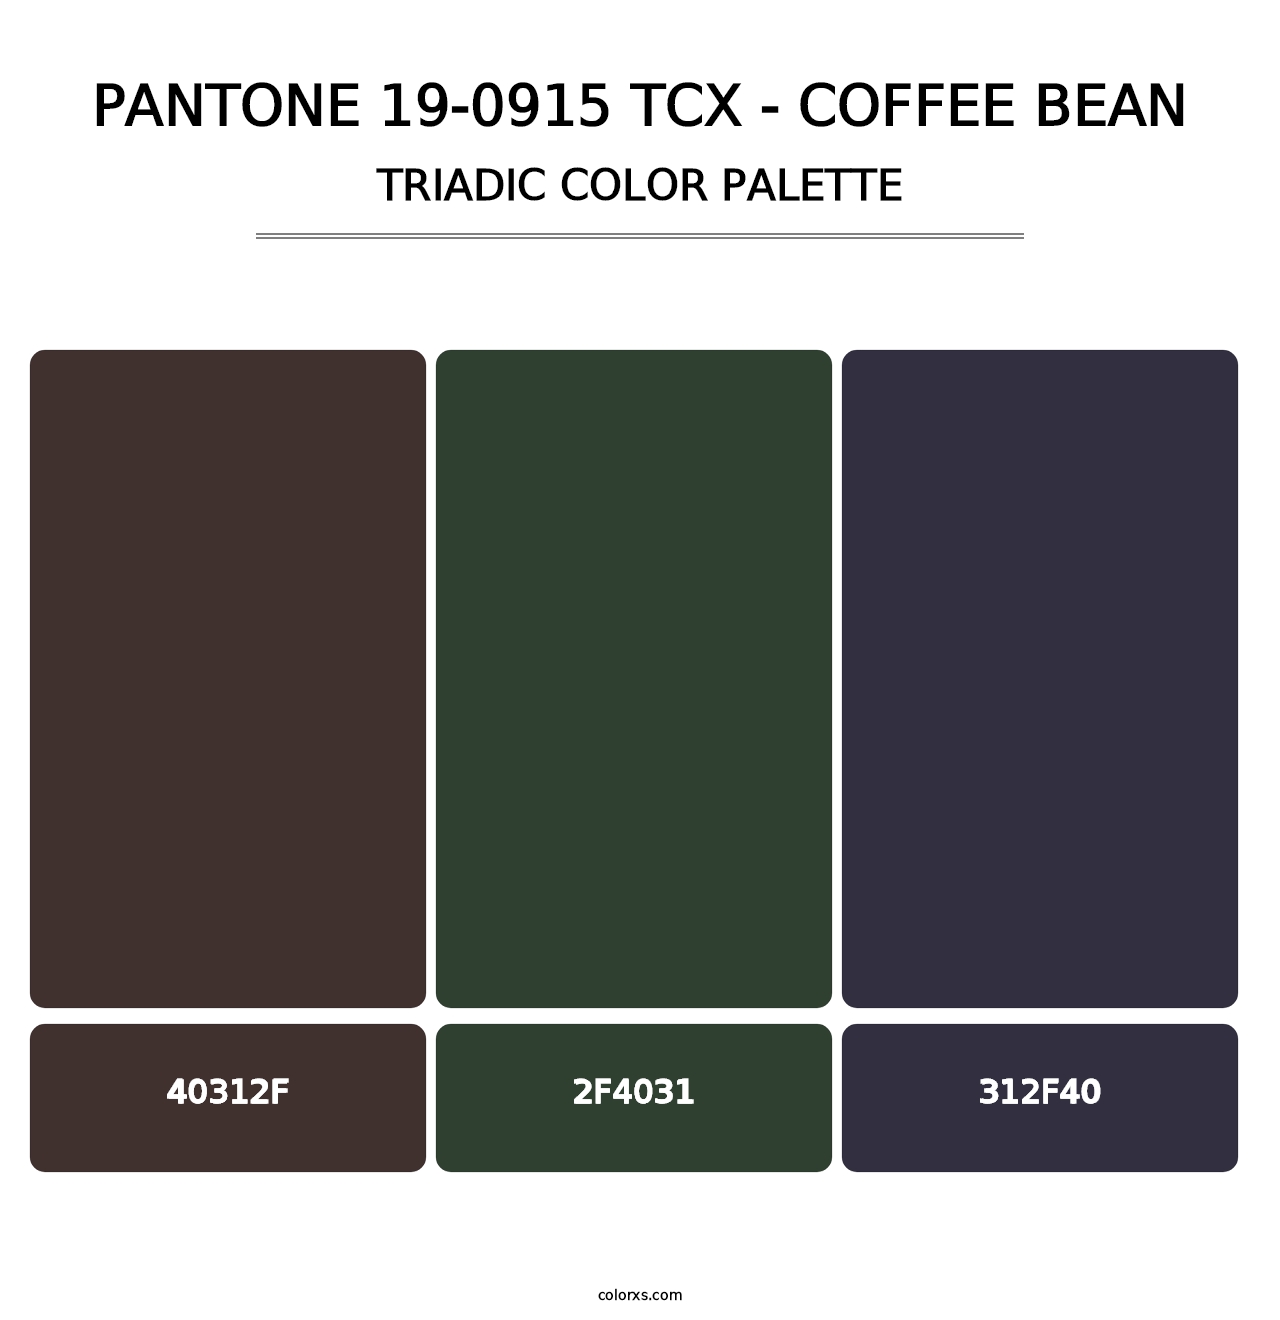 PANTONE 19-0915 TCX - Coffee Bean - Triadic Color Palette